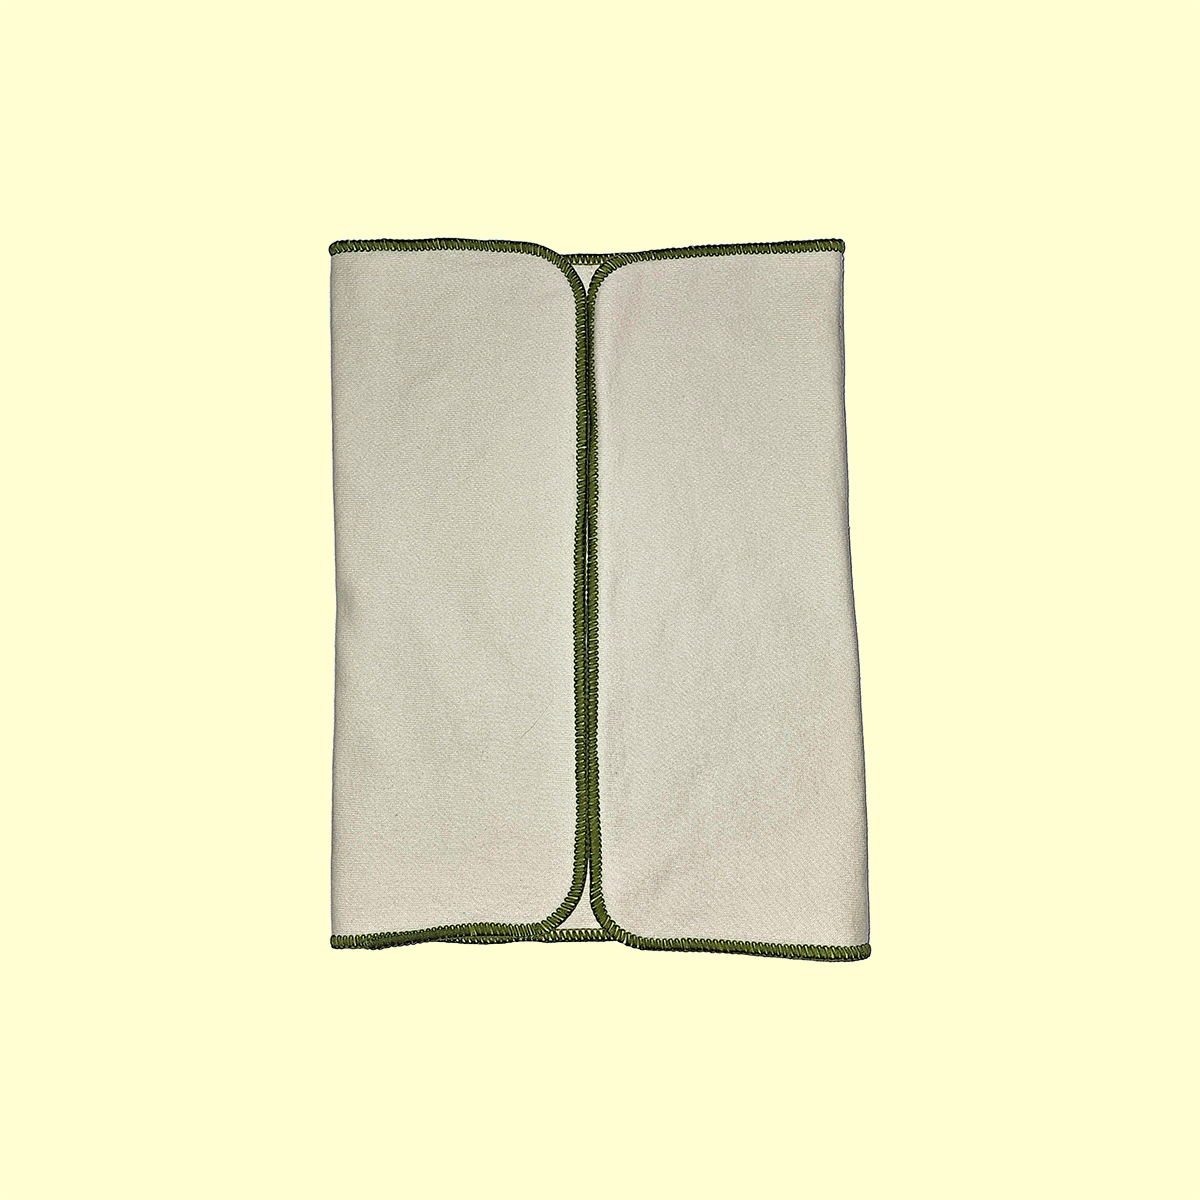 2 layer hemp cotton quadrifold - Super absorber